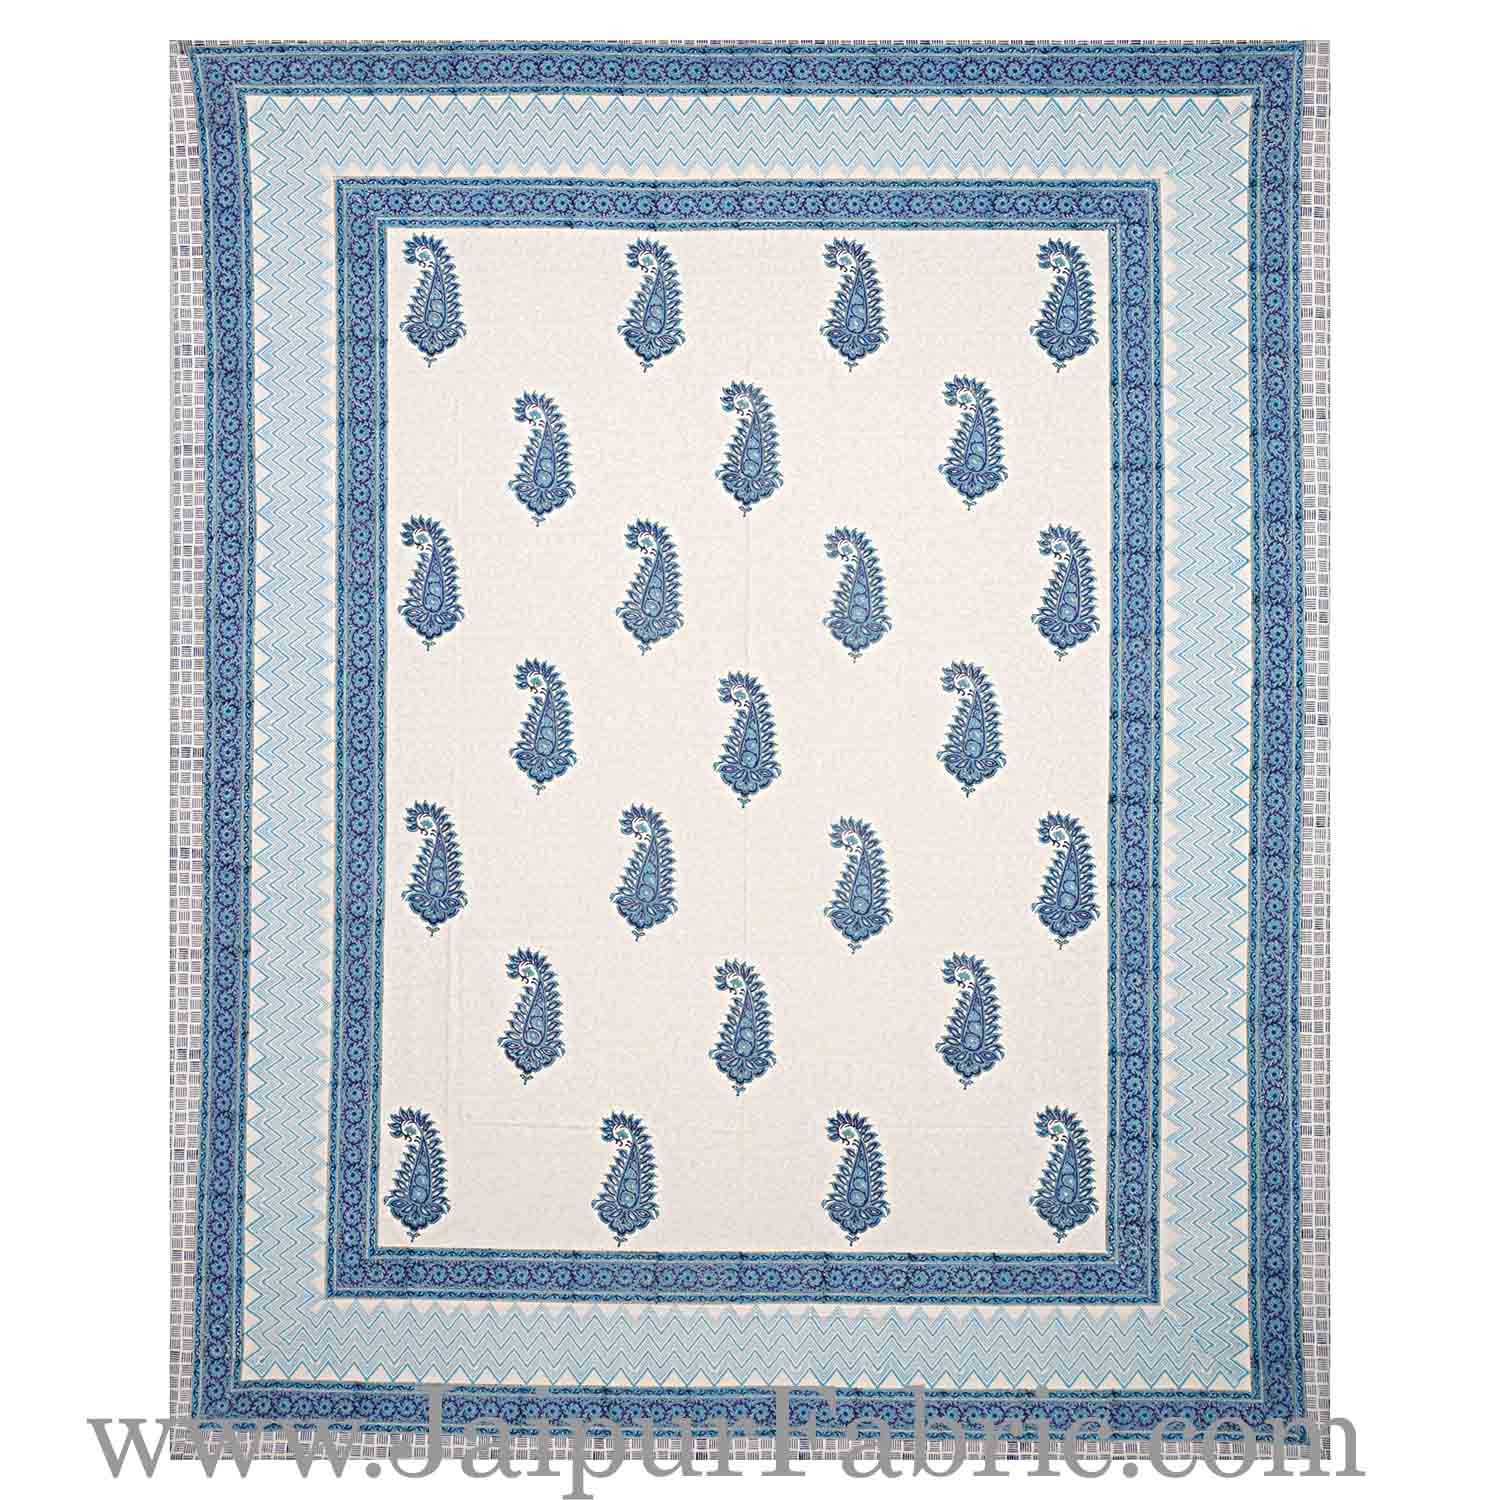 Double Bed Sheet White Base With Kadi Print Blue Rajasthani Buta Hand Block Print Super Fine  Cotton